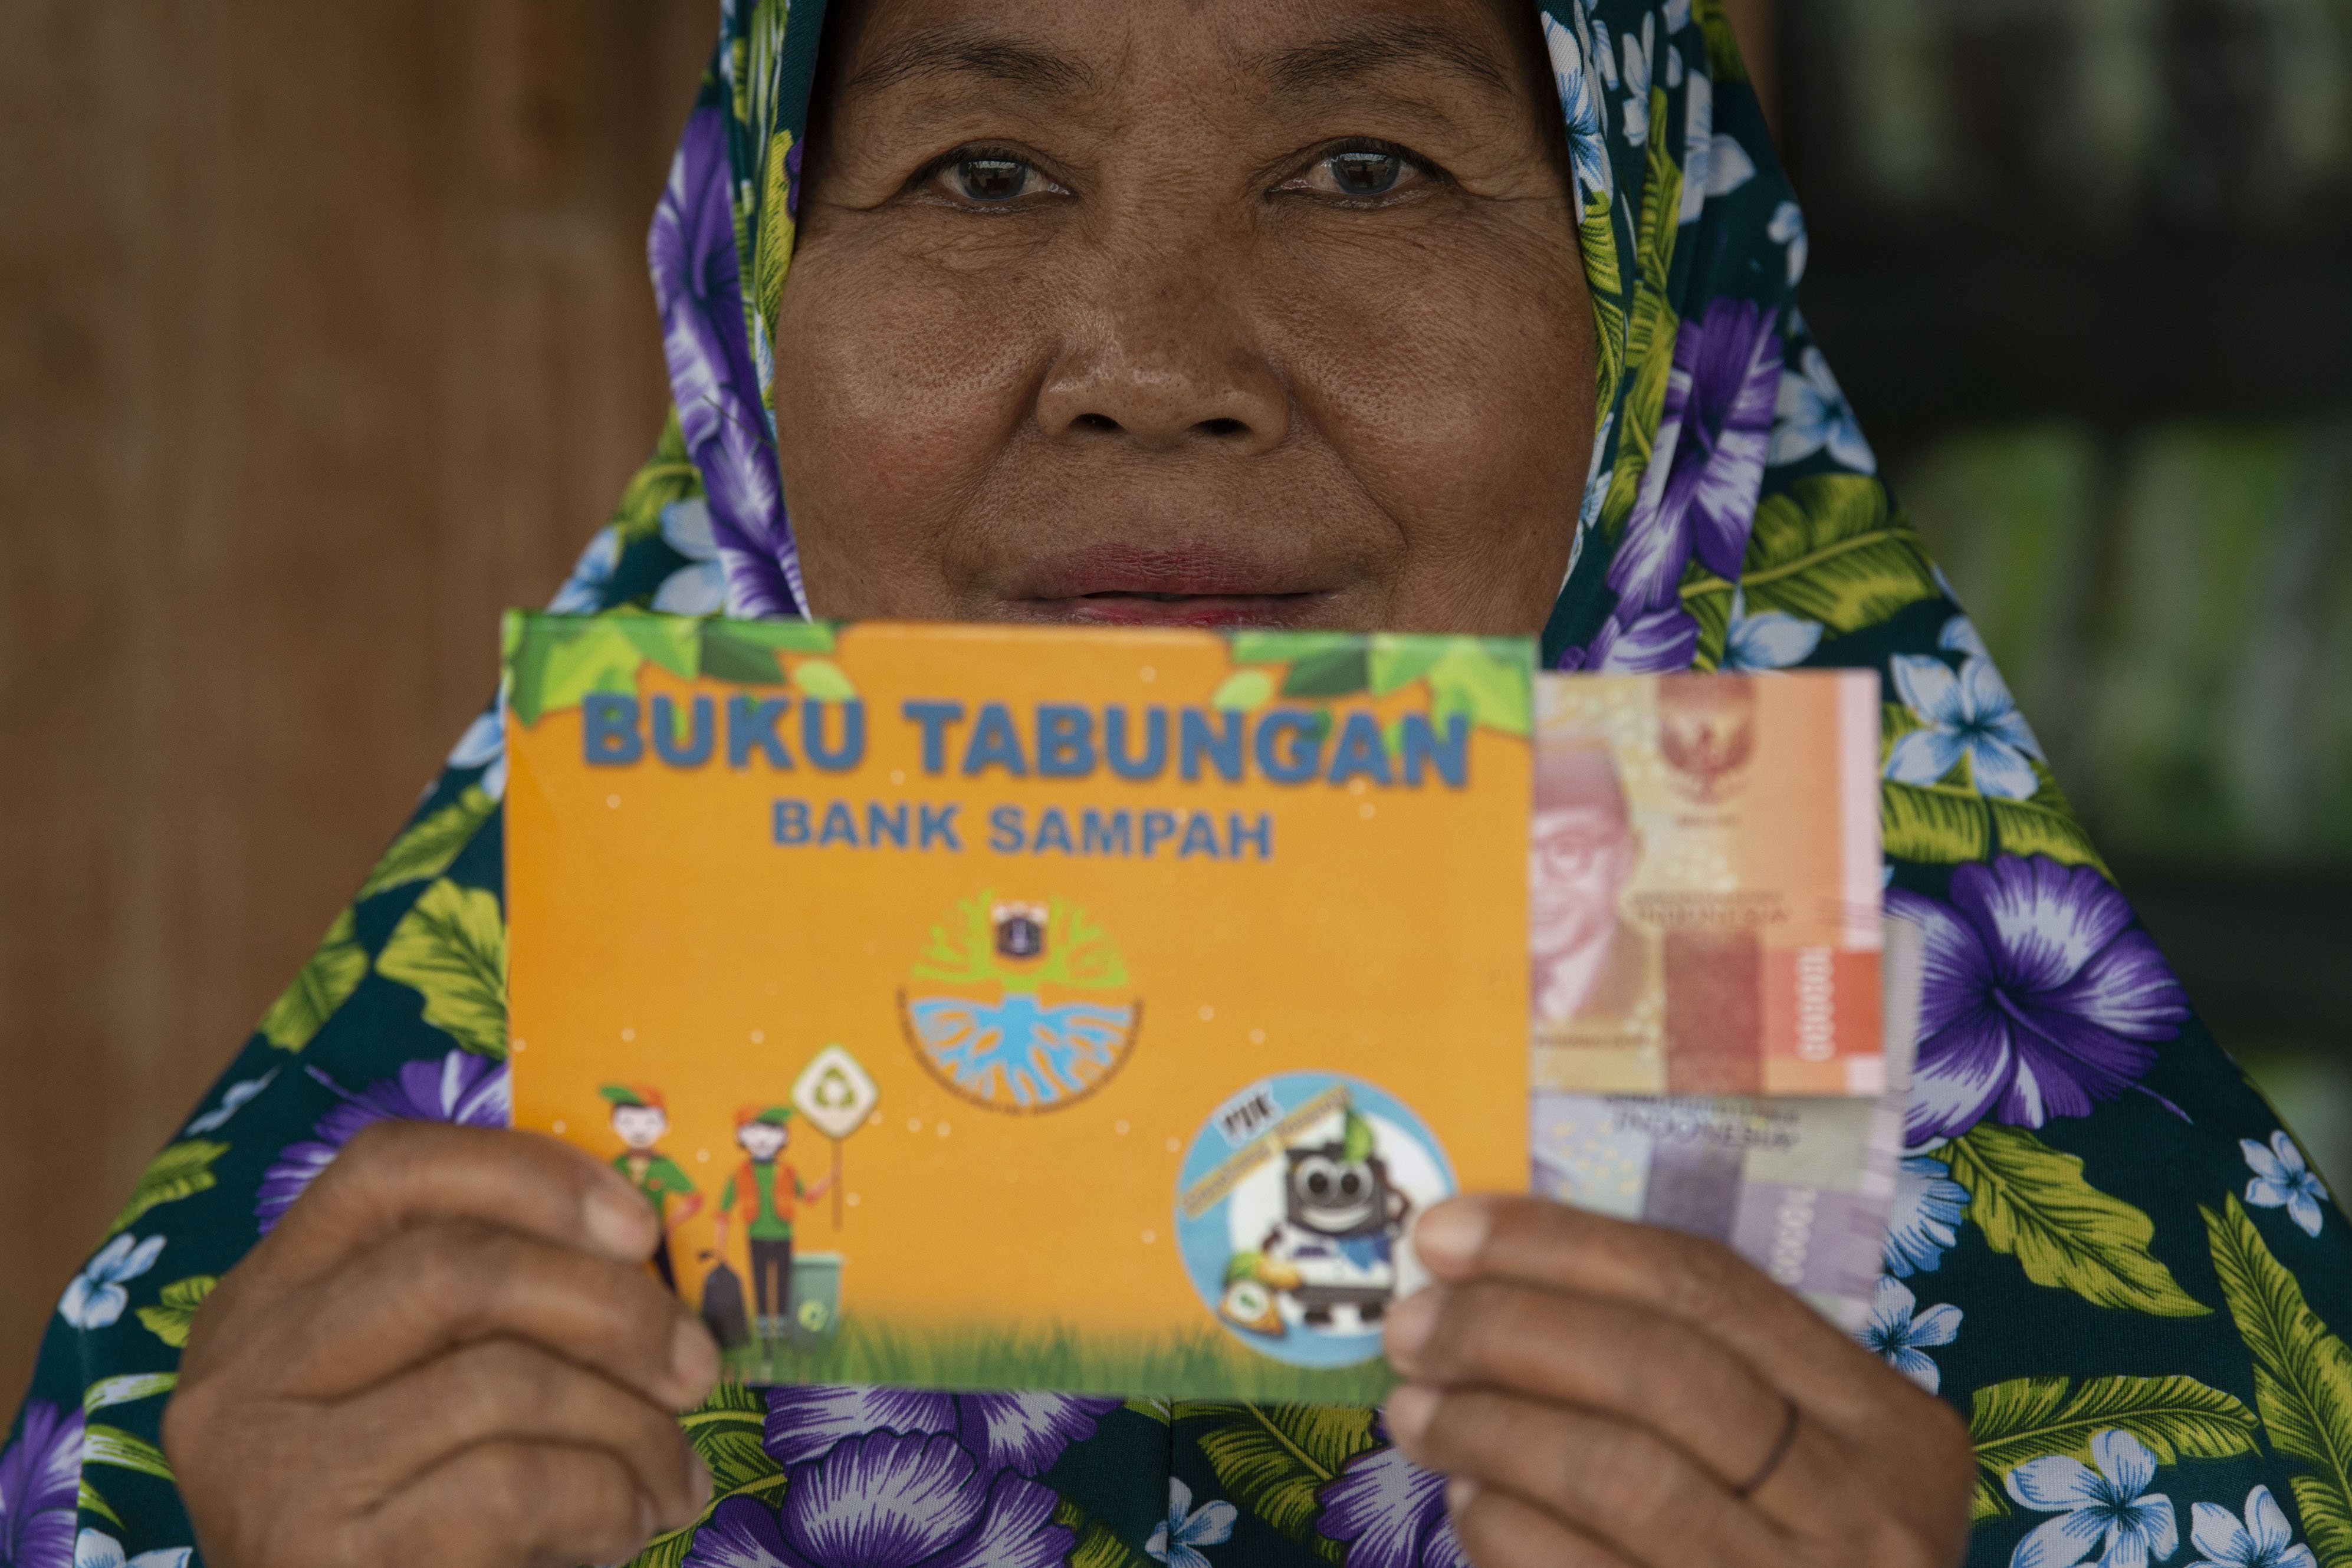 Sejumlah warga yang merupakan nasabah Bank Sampah Sabira Bersih Gembira menunjukkan hasil setoran sampah yang dikumpulkannya di Pulau Sabira, Kepulauan Seribu, Provinsi DKI Jakarta.